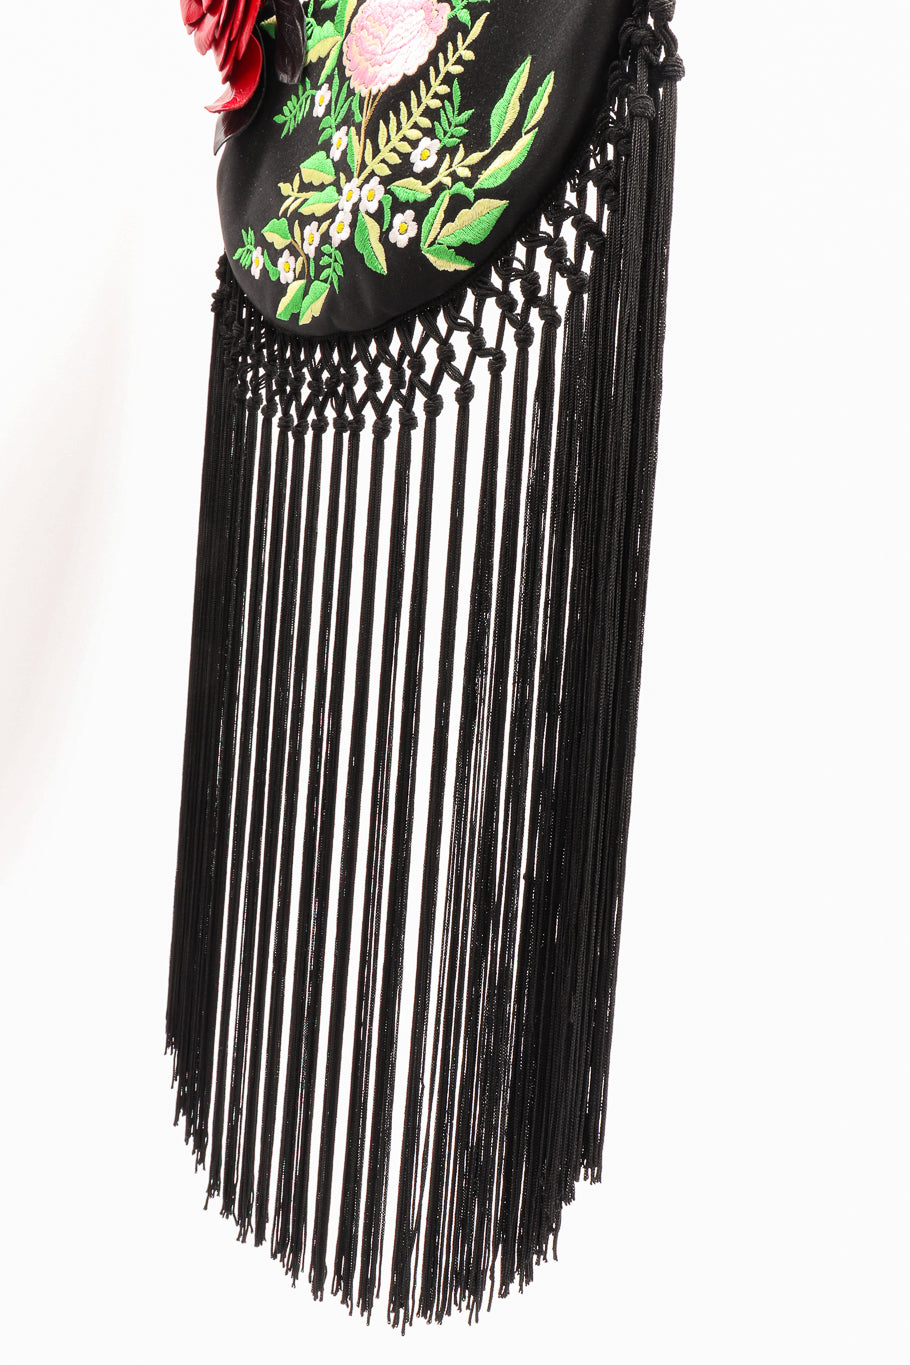 Fringe shoulder bag by Moschino on white background hanging fringe close @recessla